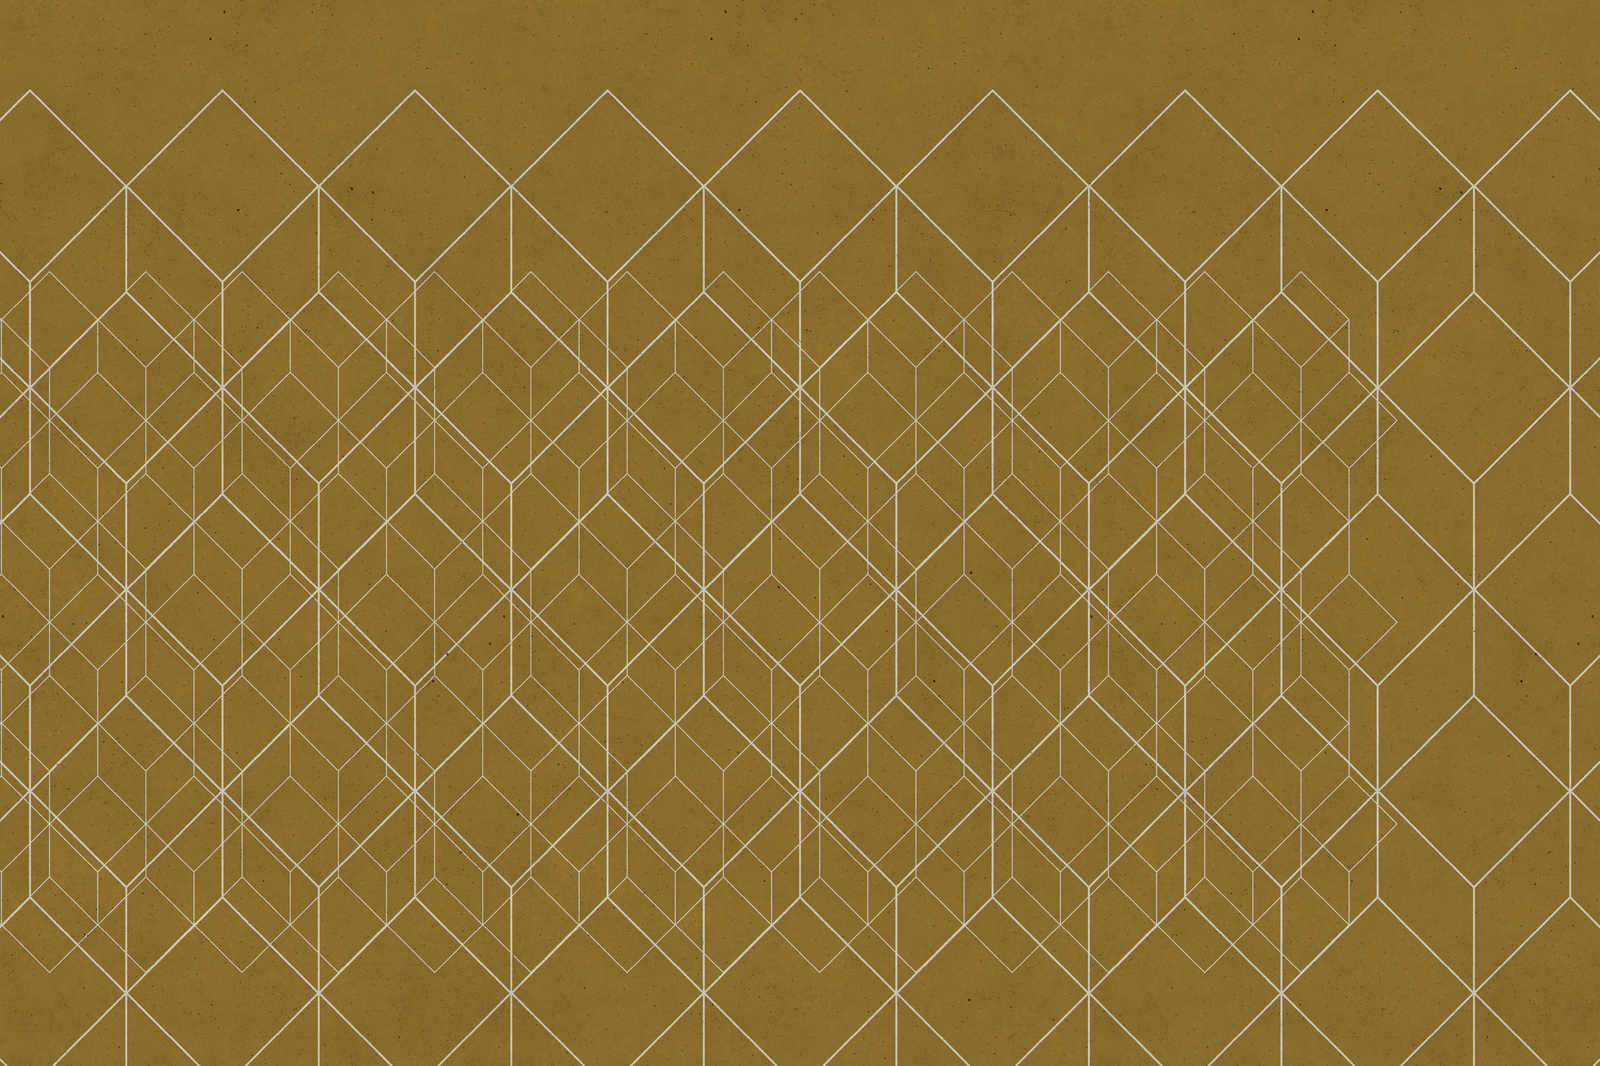             Leinwandbild geometrisches Muster – 1,20 m x 0,80 m
        